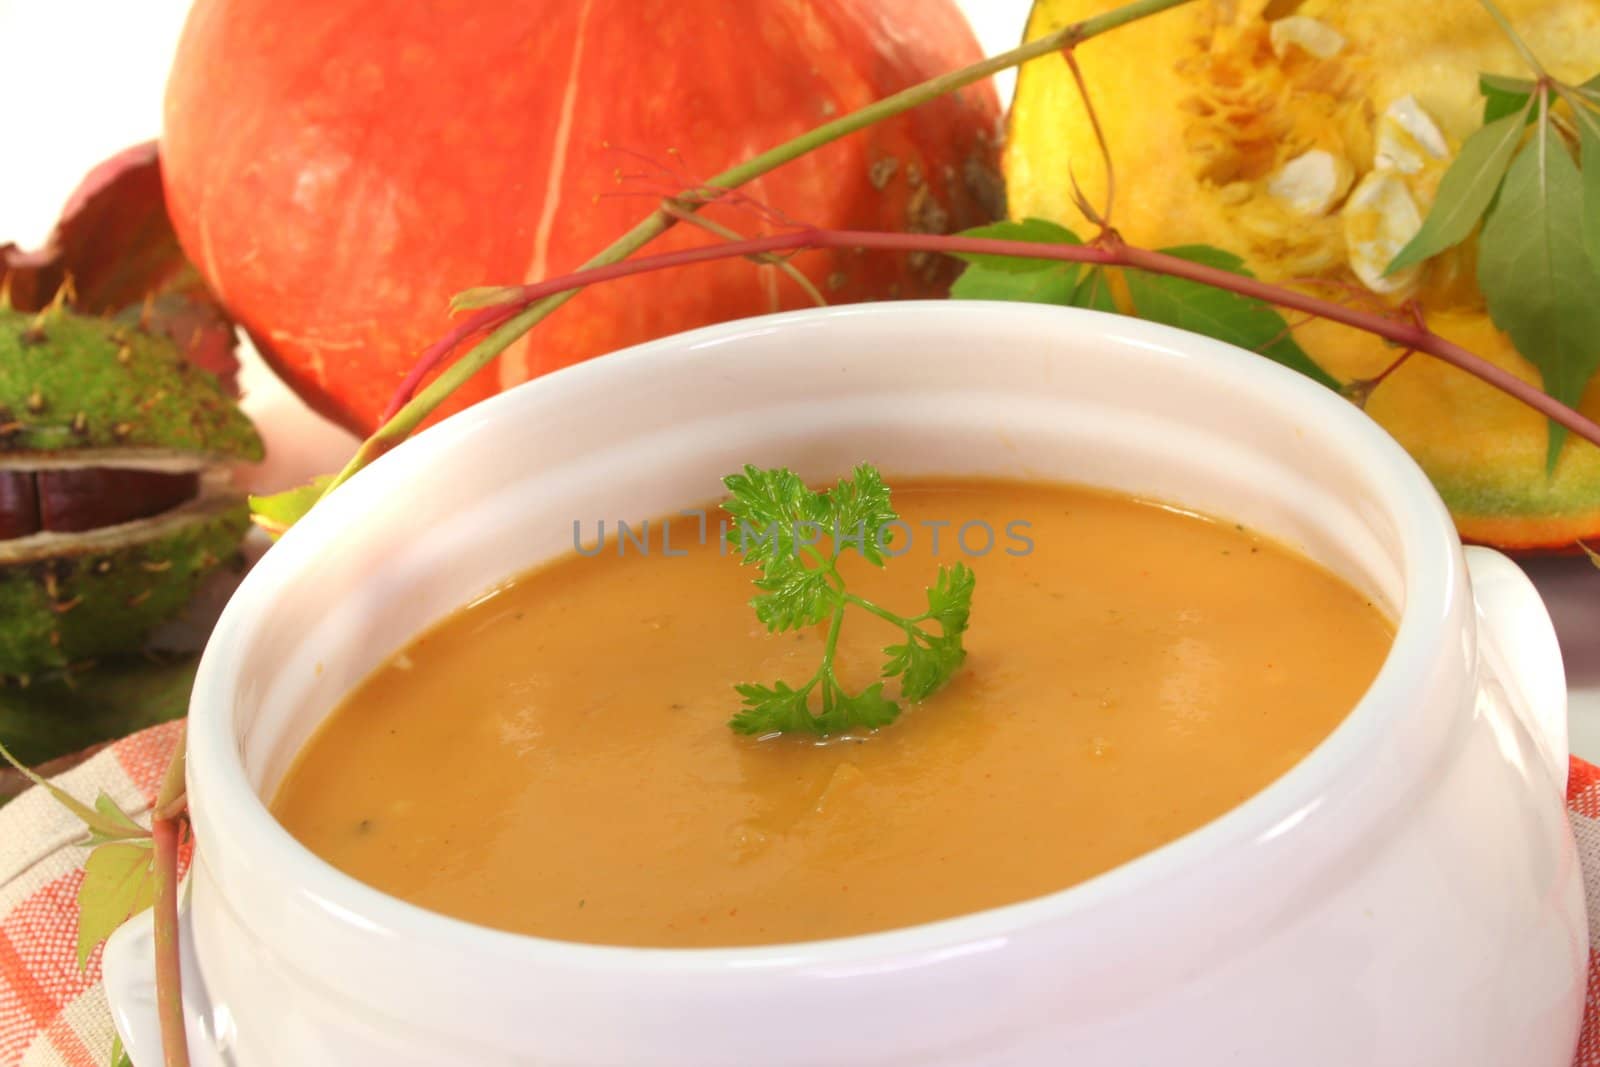 Pumpkin cream soup with fresh Hokkaido pumpkin and autumn leaves